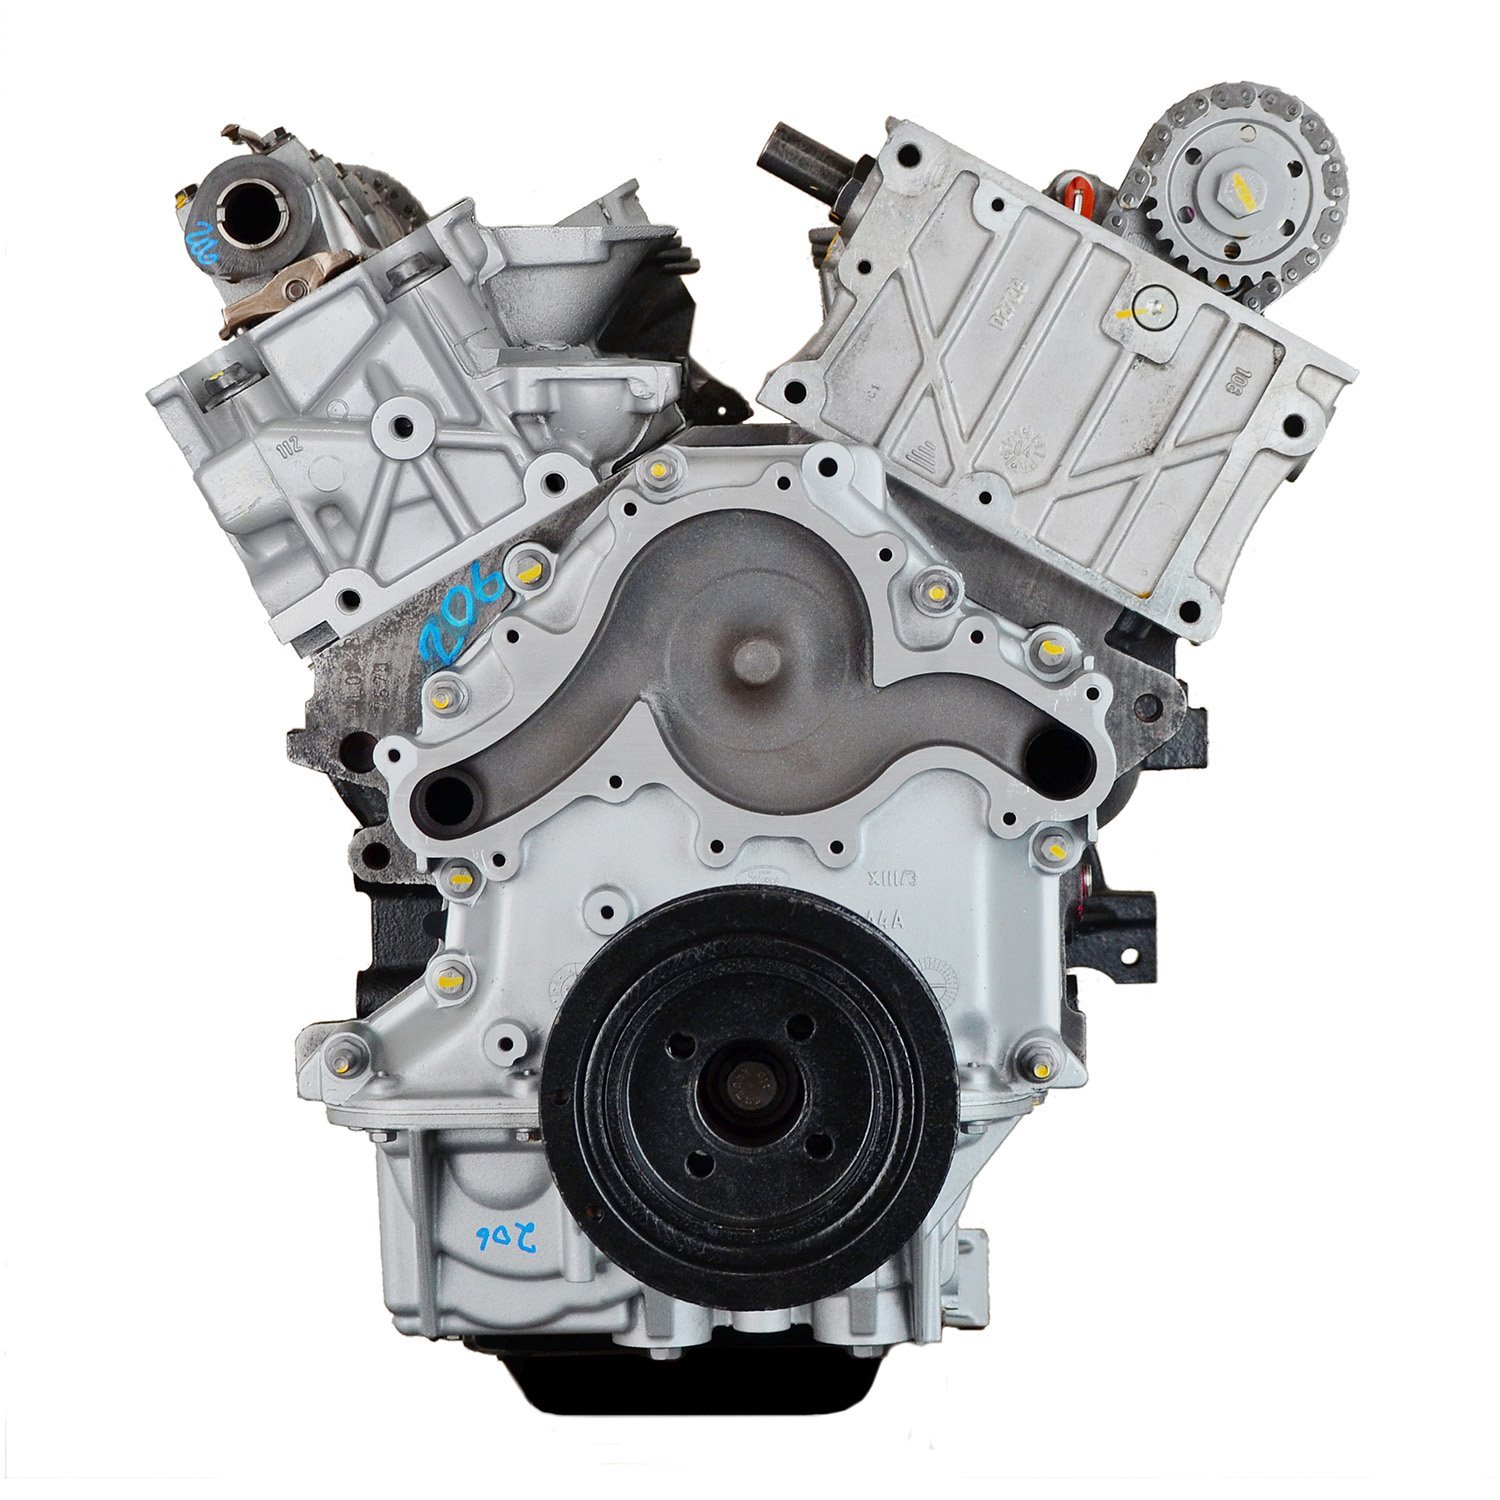 Remanufactured Crate Engine for 2007-2011 Ford Explorer & Ranger with 4.0L V6